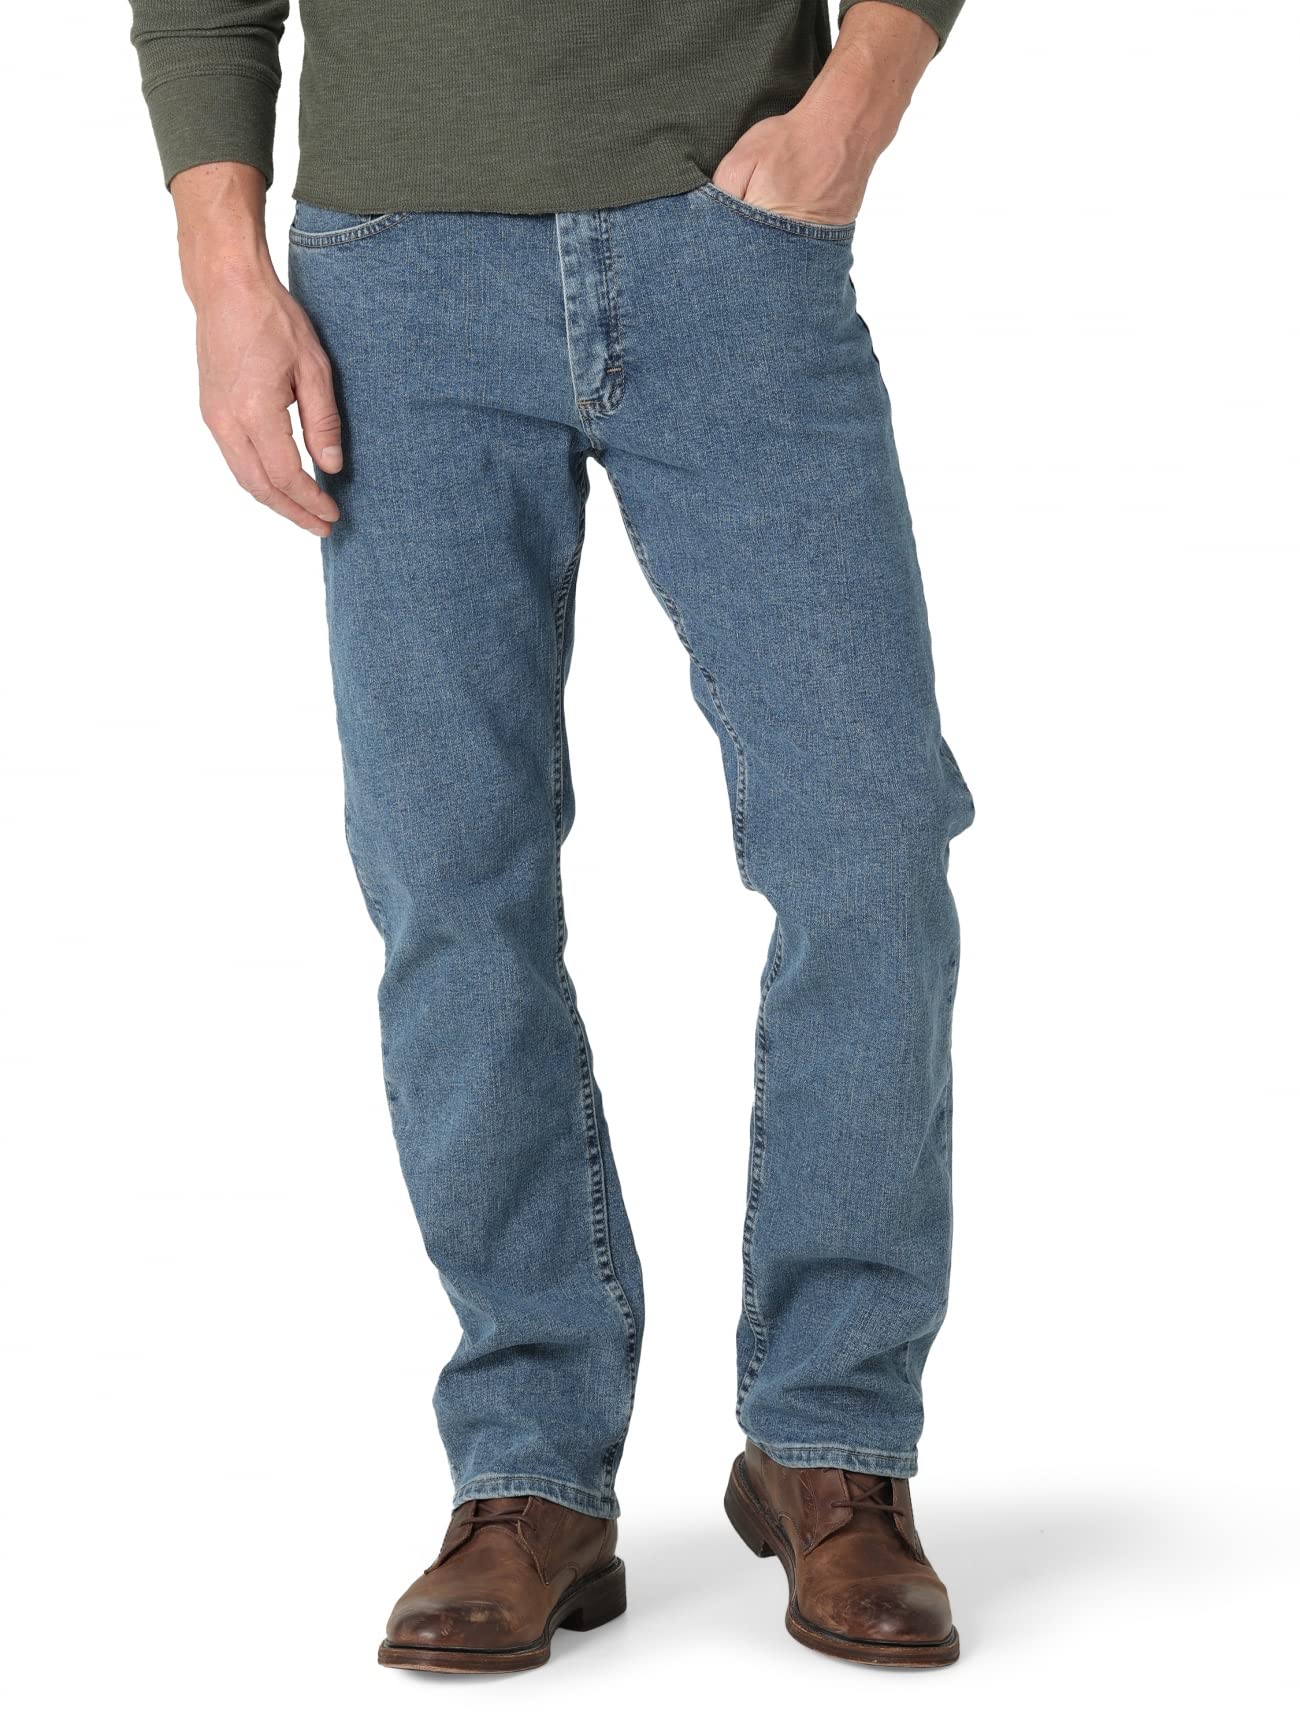 Wrangler Authentics Men's Regular Fit Comfort Flex Waist Jean, Light Stonewash, 36W x 34L